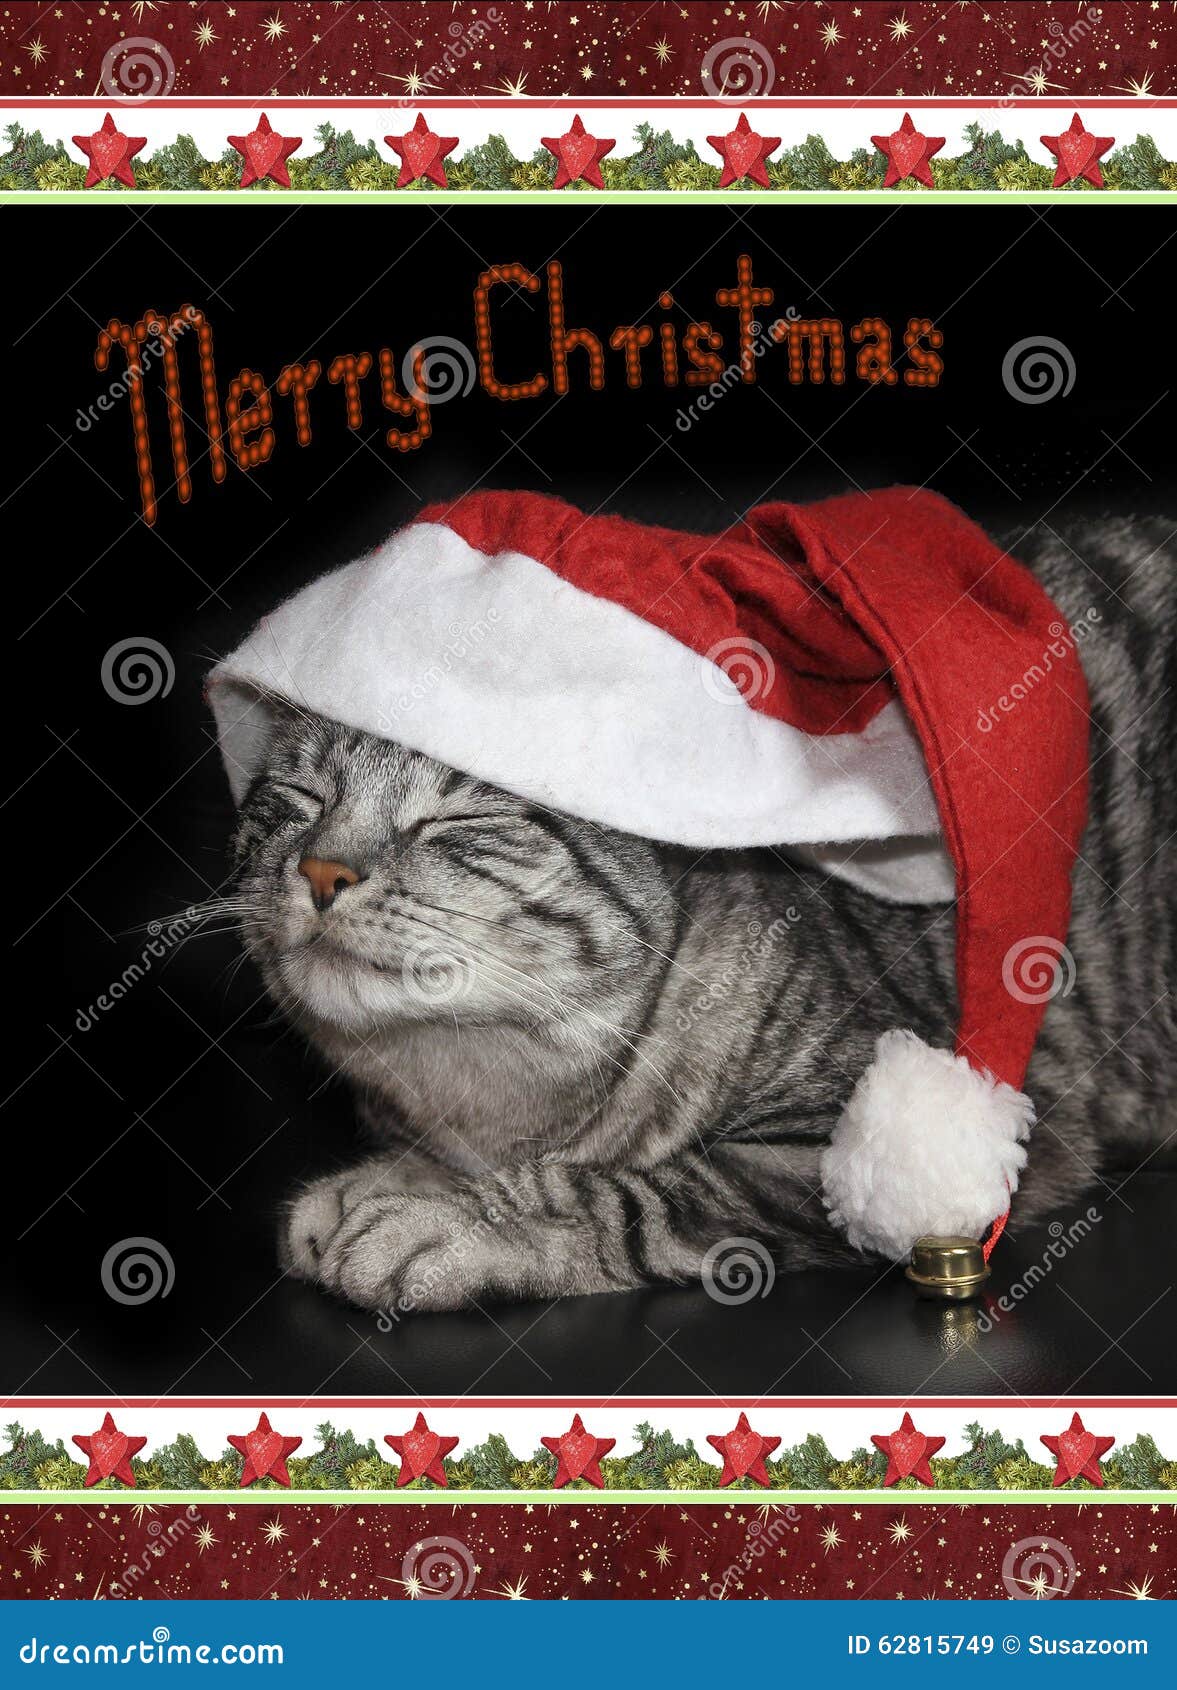 cute tabby cat with saint nicholas cap, christmassy border, card